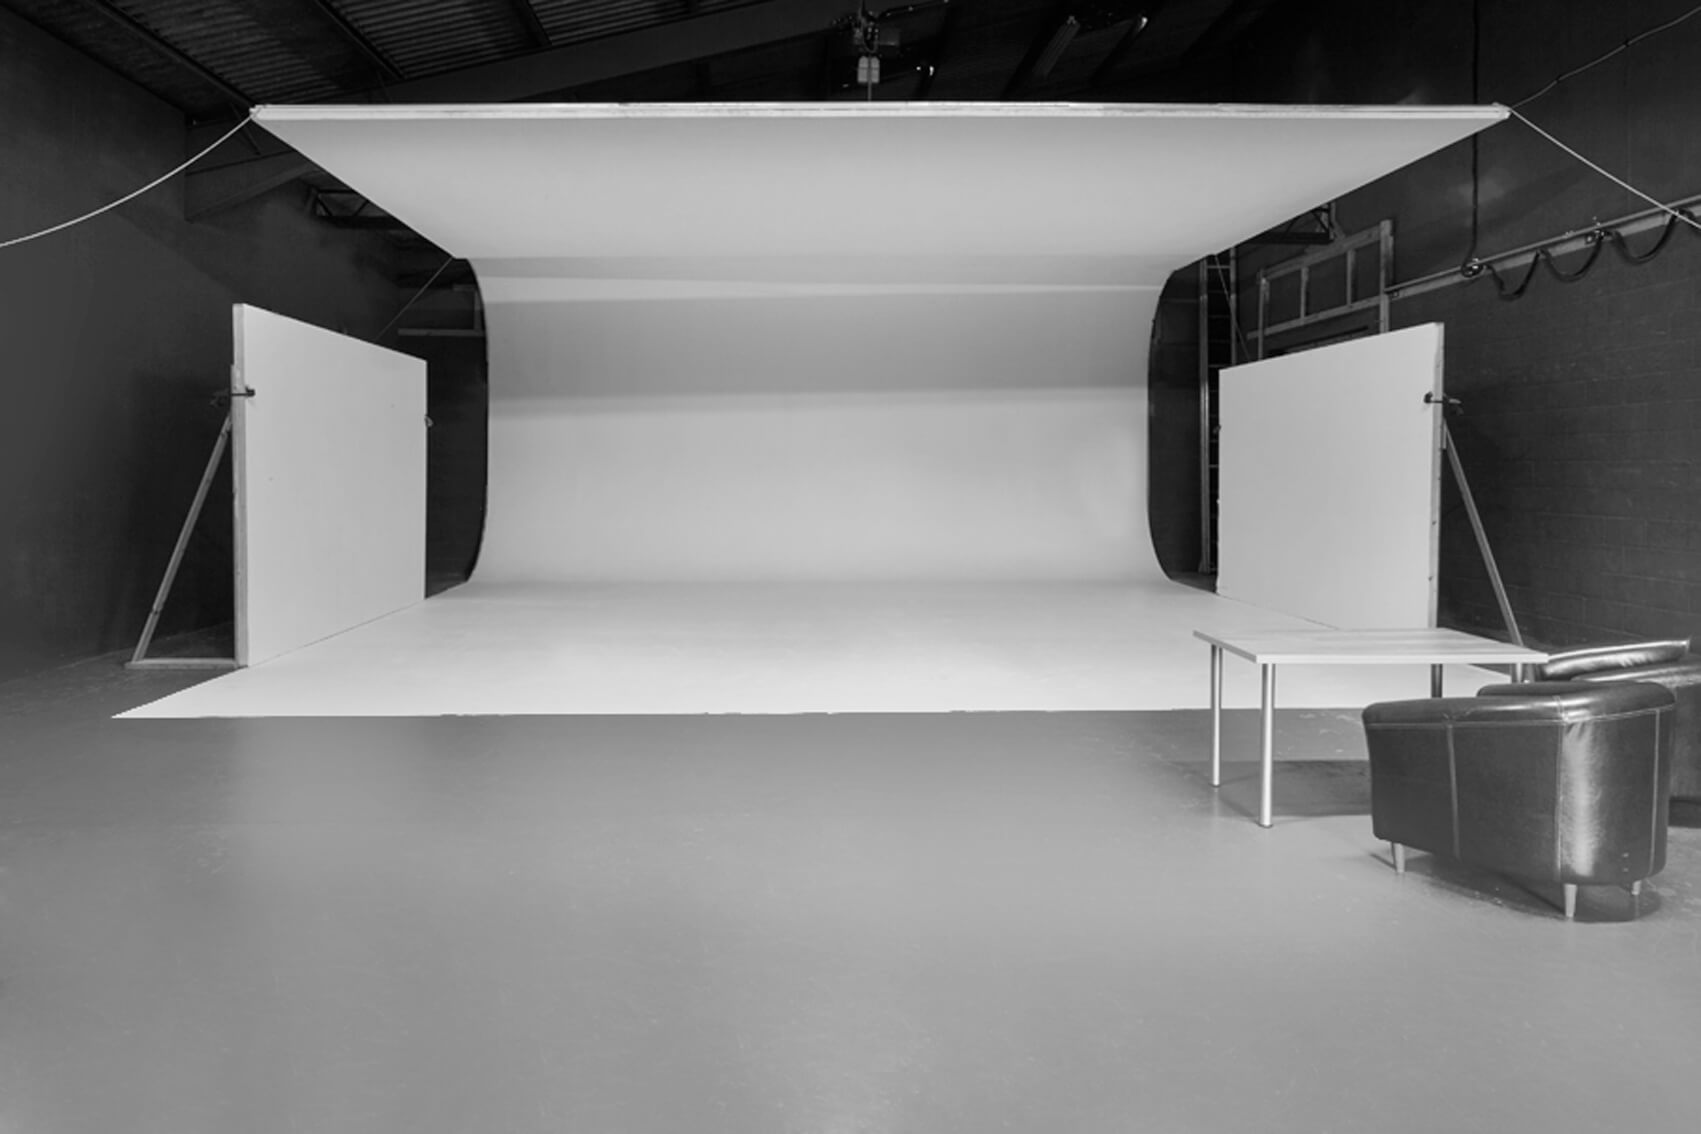 Studio-3-three-moorland-studios-fashion-studio-infinity-wall-film-photography-hire-space.jpg